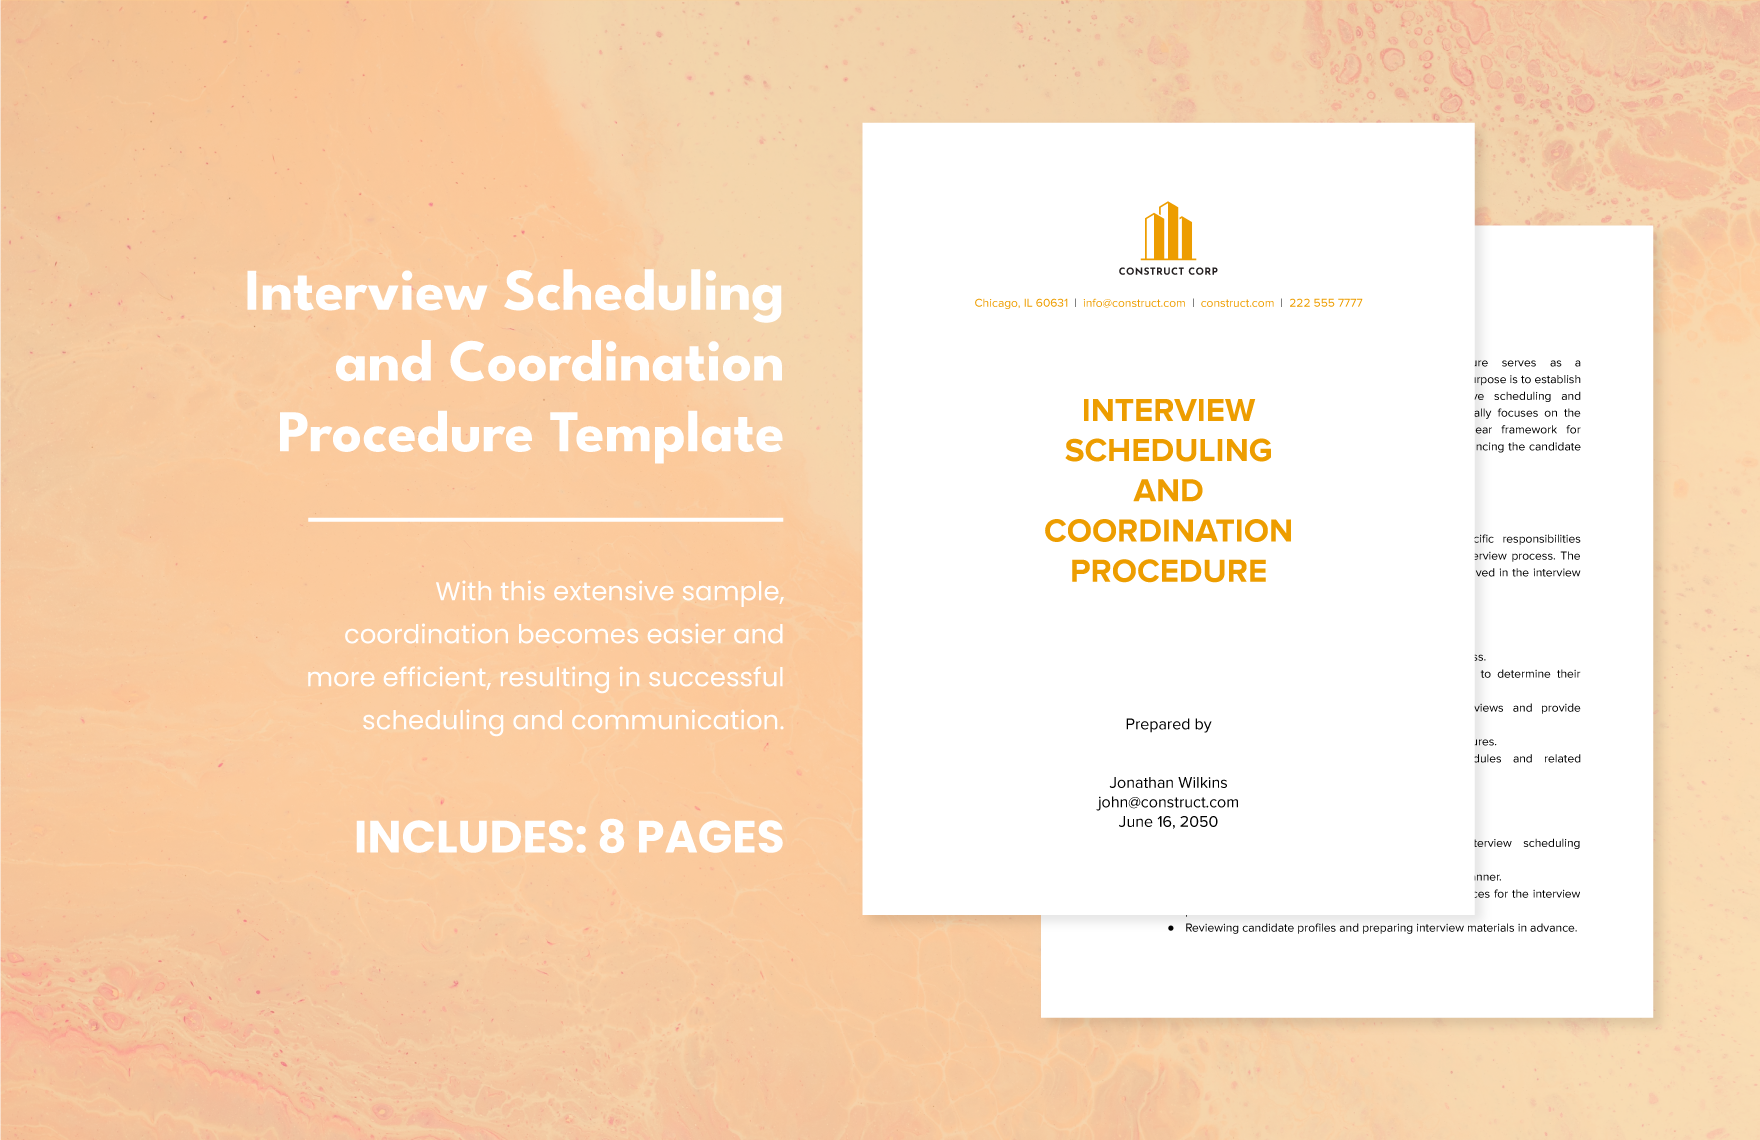 Interview Scheduling and Coordination Procedure Template